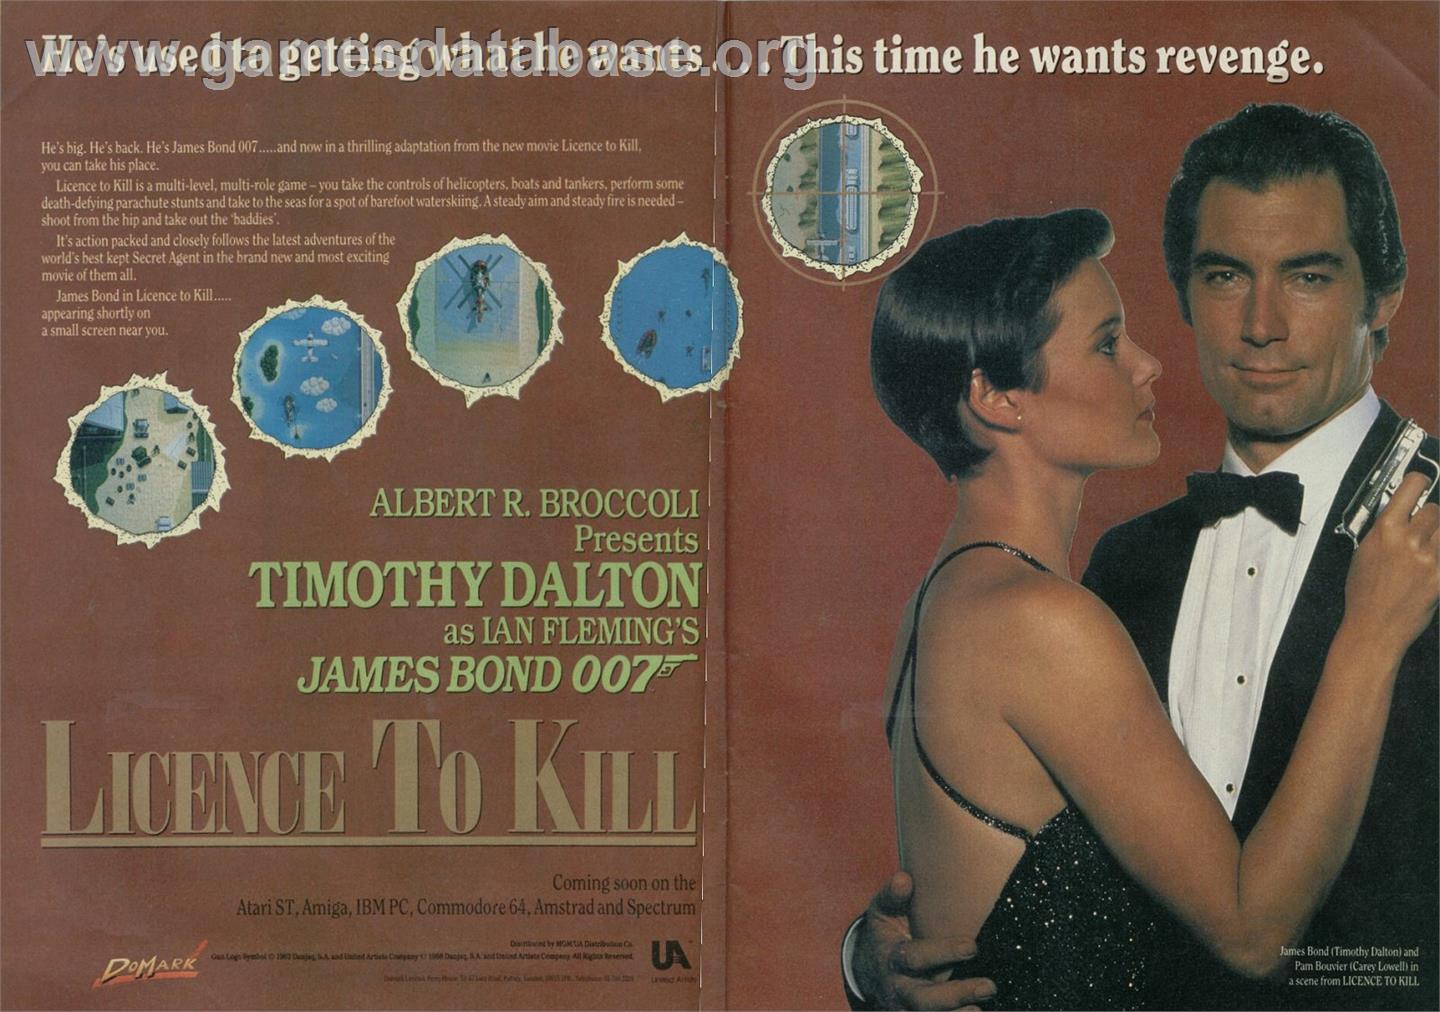 007: Licence to Kill - Sinclair ZX Spectrum - Artwork - Advert